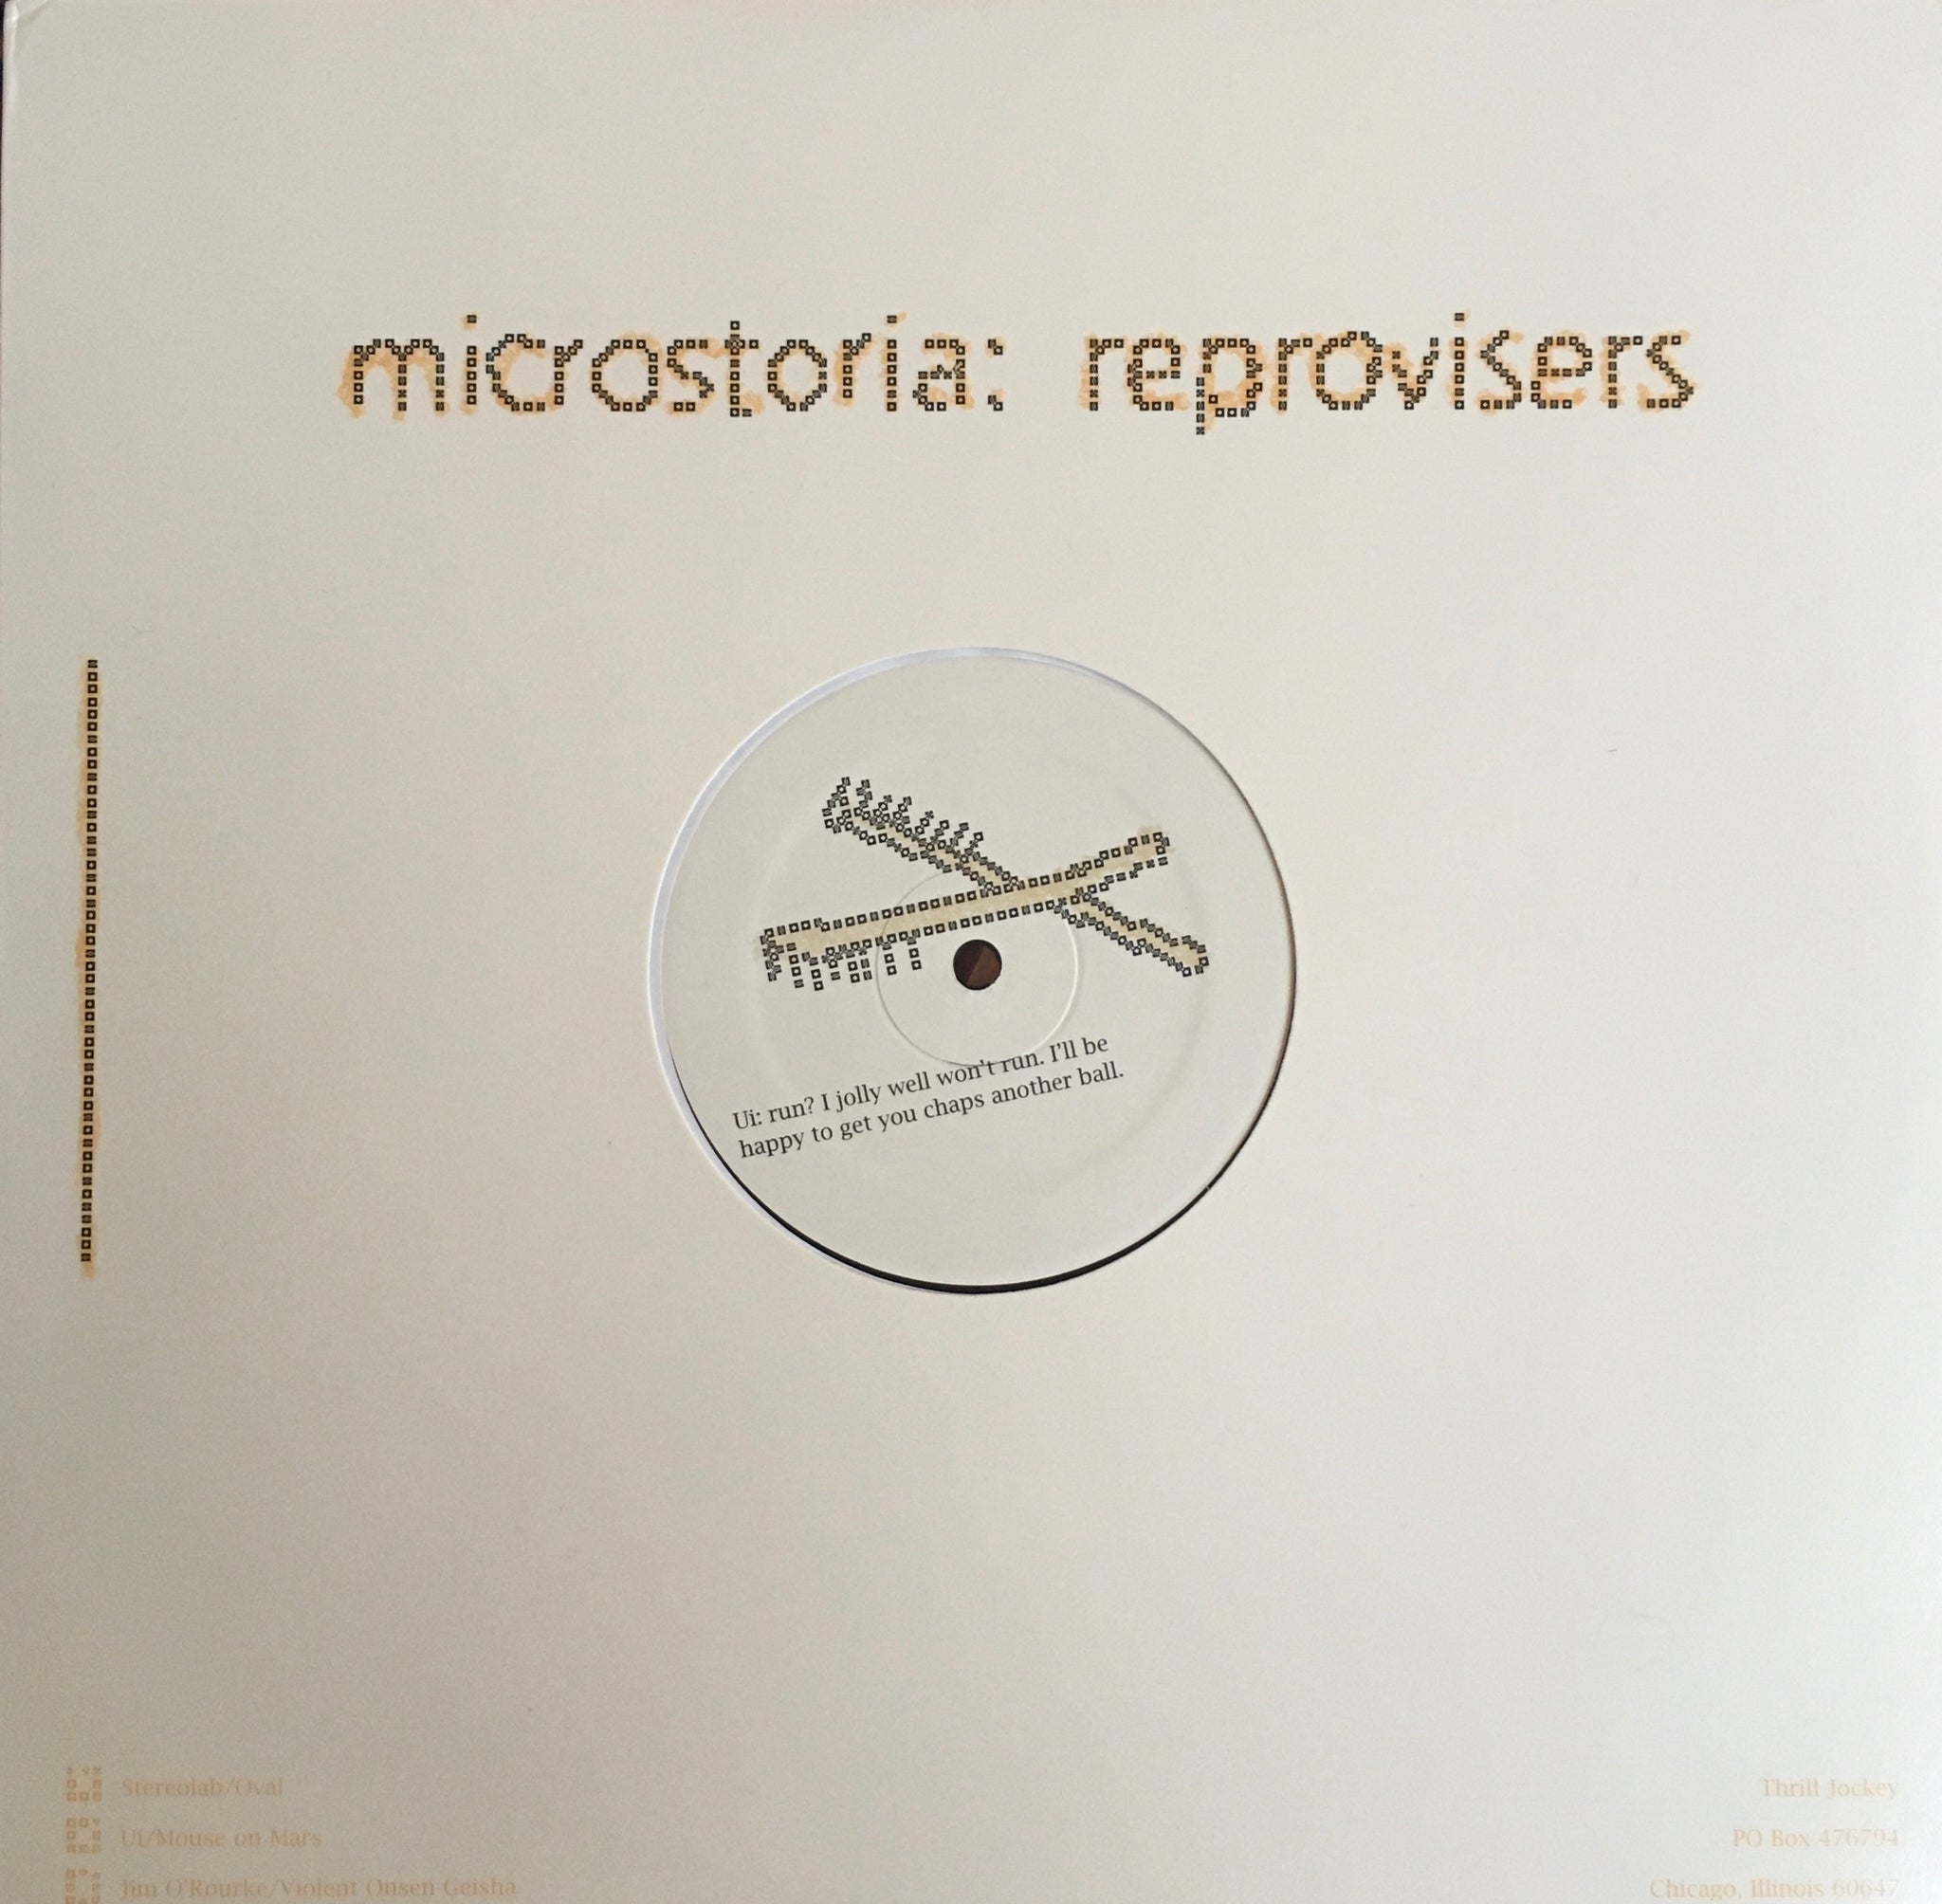 Reprovisers Series: Mouse On Mars b/w UI LP (1997)